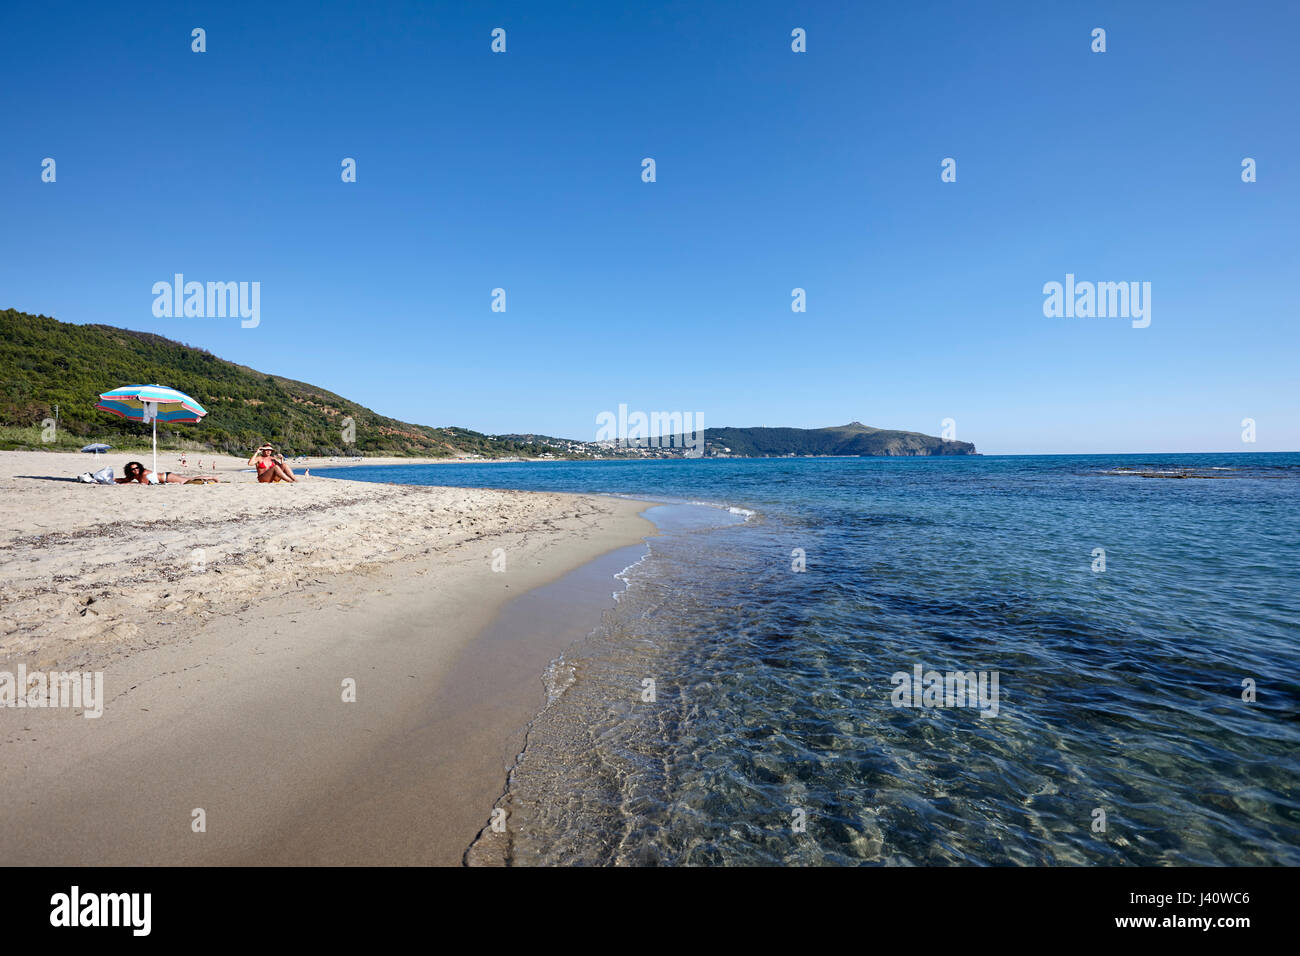 Palinuro Beach, south of Pisciotta, National Park Cilento and Vallo di Diano, UNESCO World Heritage Site, Cilentan Coast, Province Salerno, Campania, Italy Stock Photo